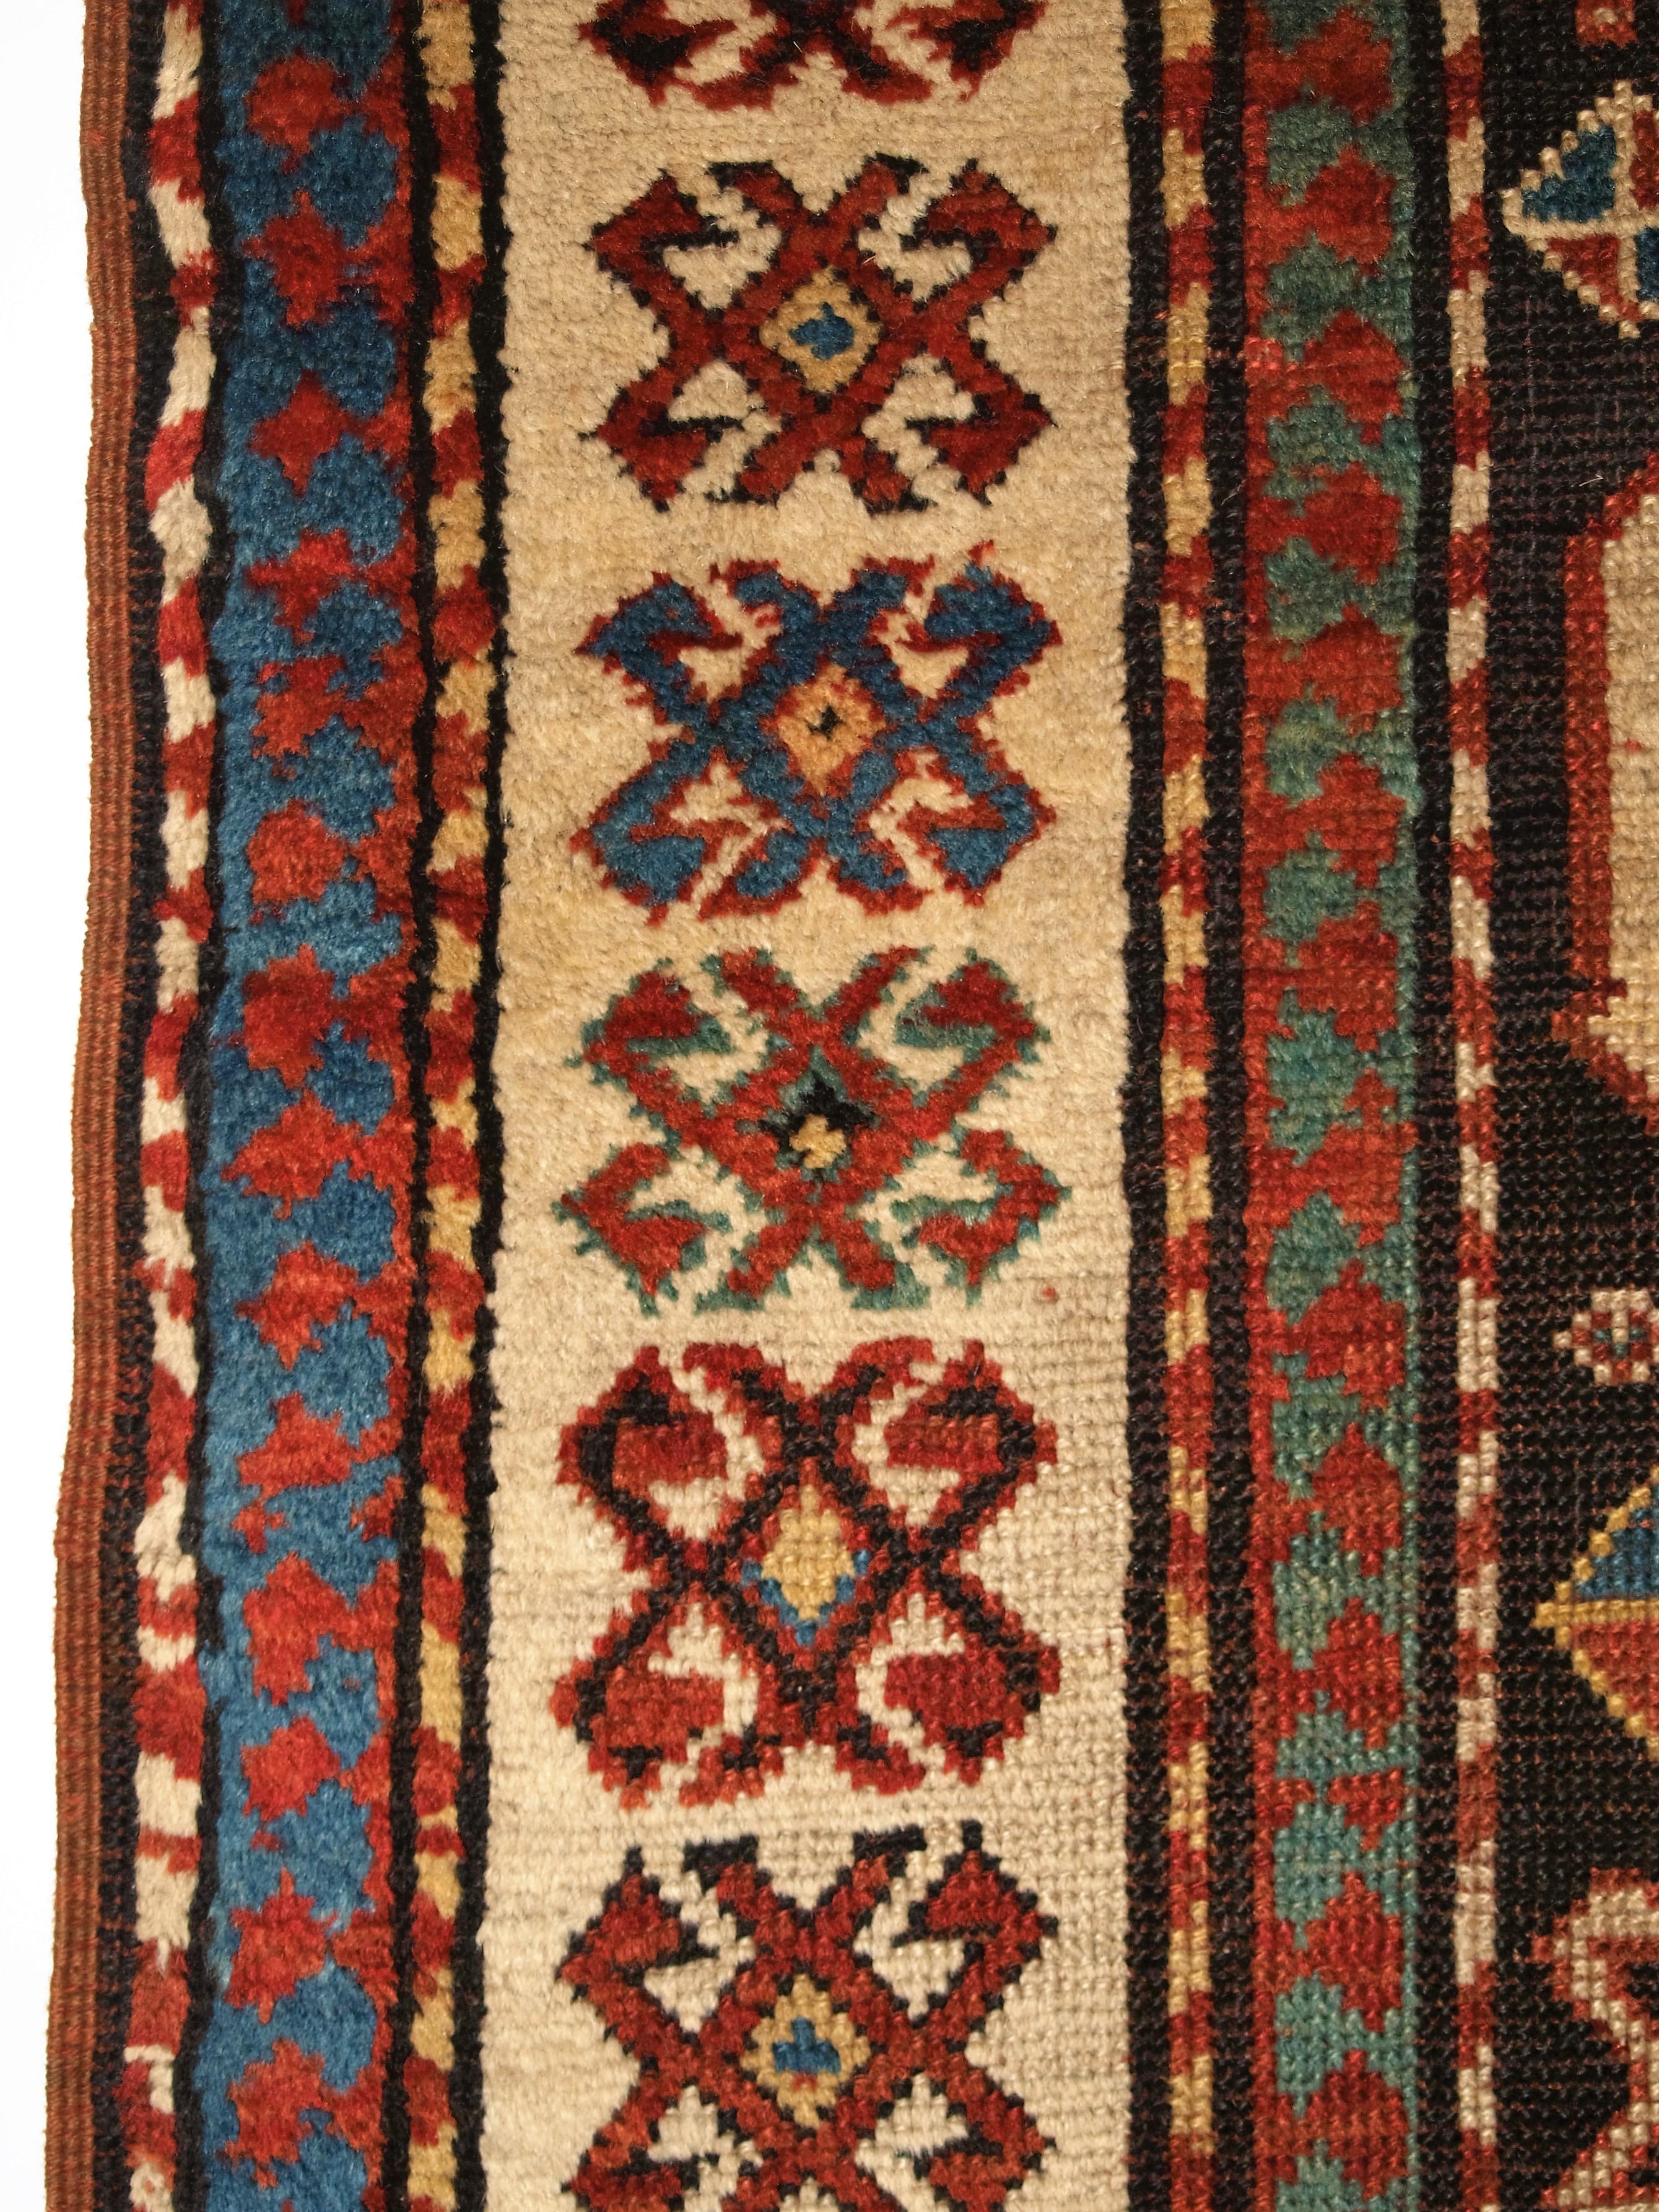 Geometric border detail of antique caucasian red/brown rug